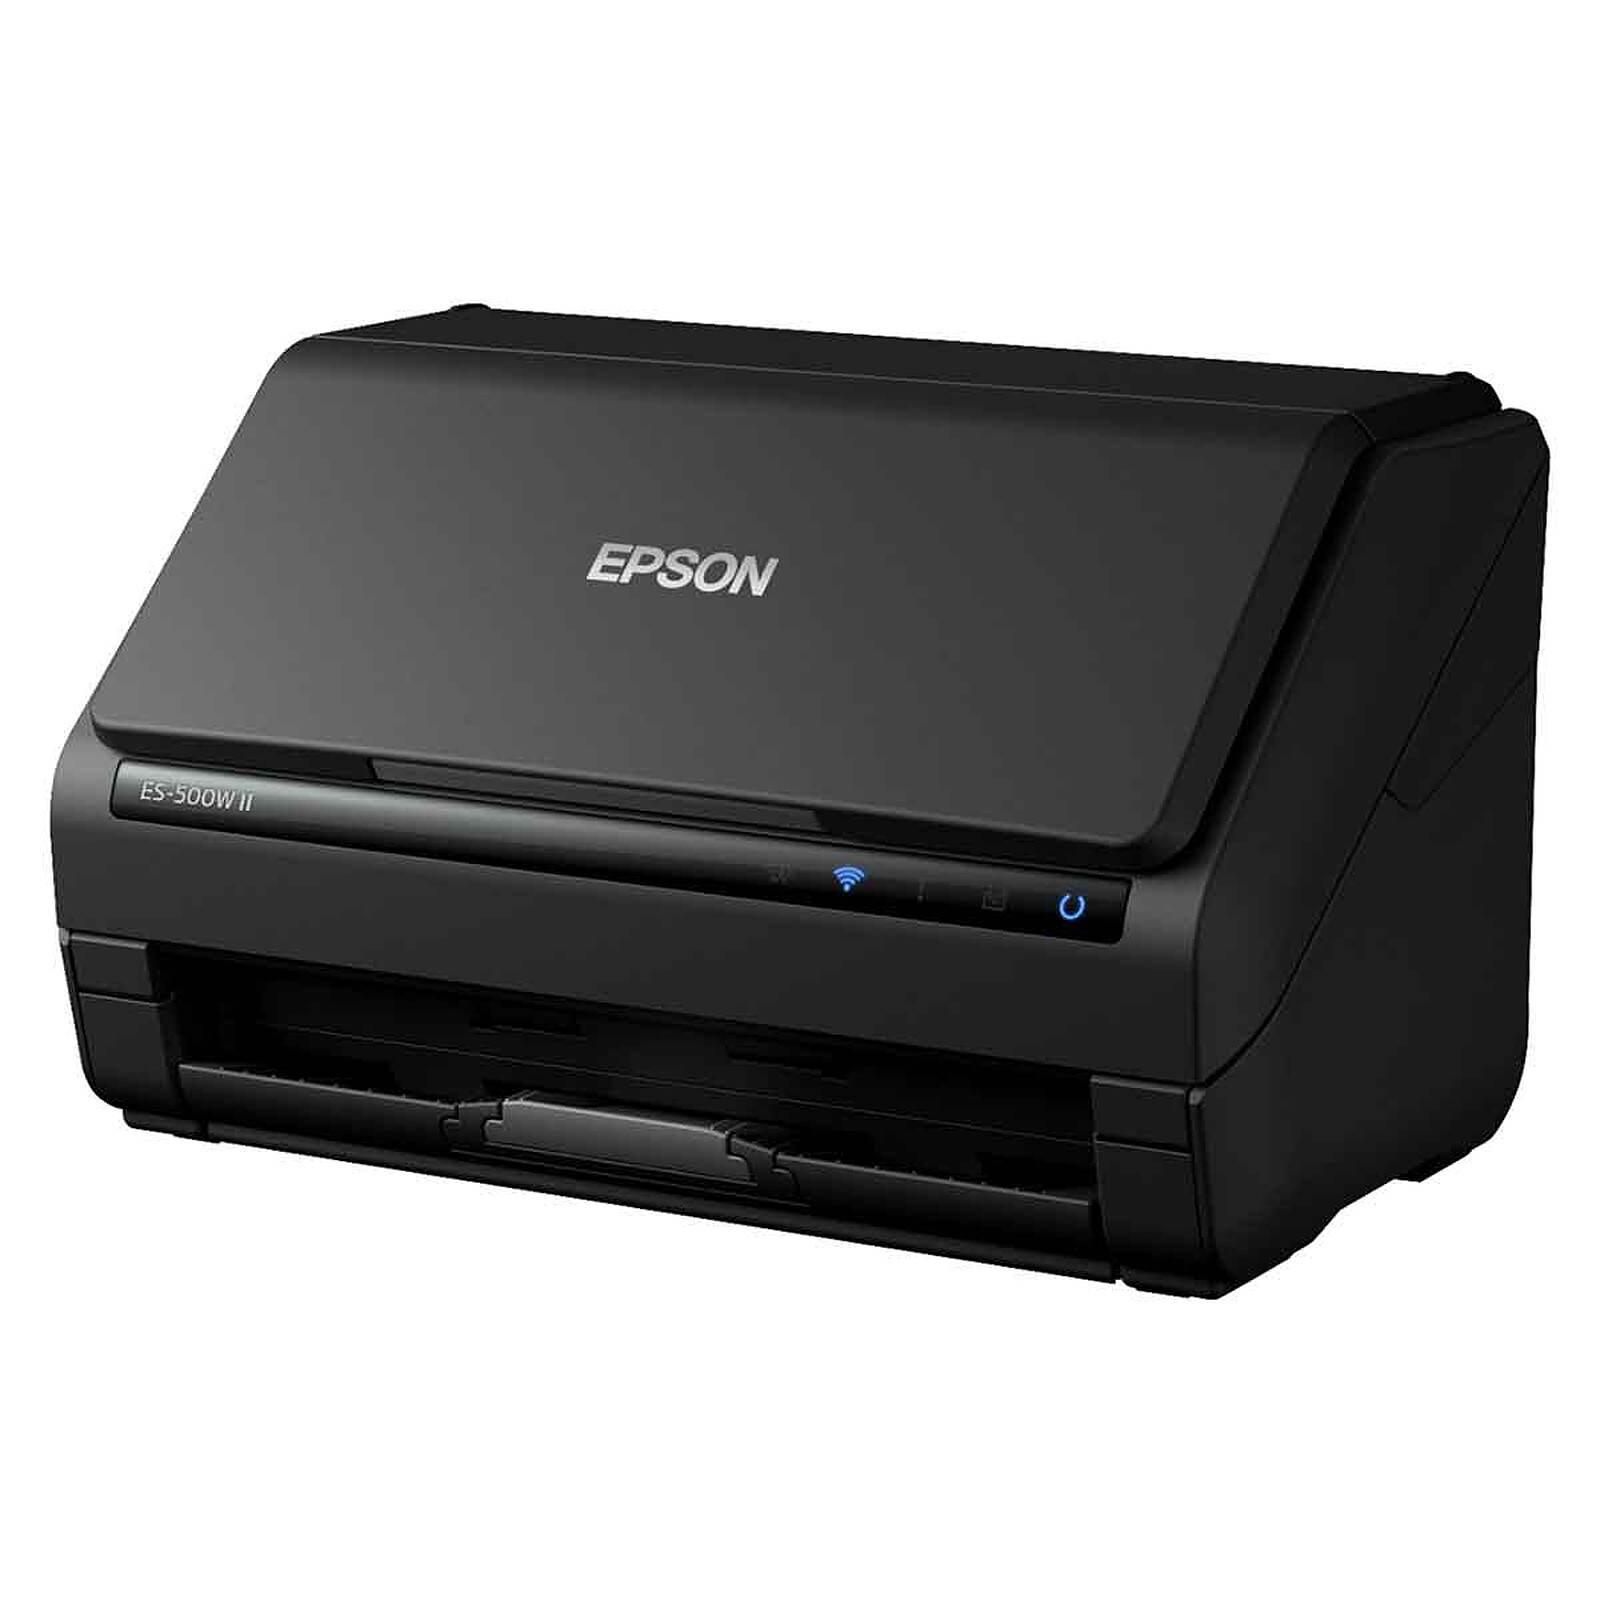 Escaner Epson Ds-530ll 35ppm Doble Cara Duplex Usb 3.0 Automatico EPSON